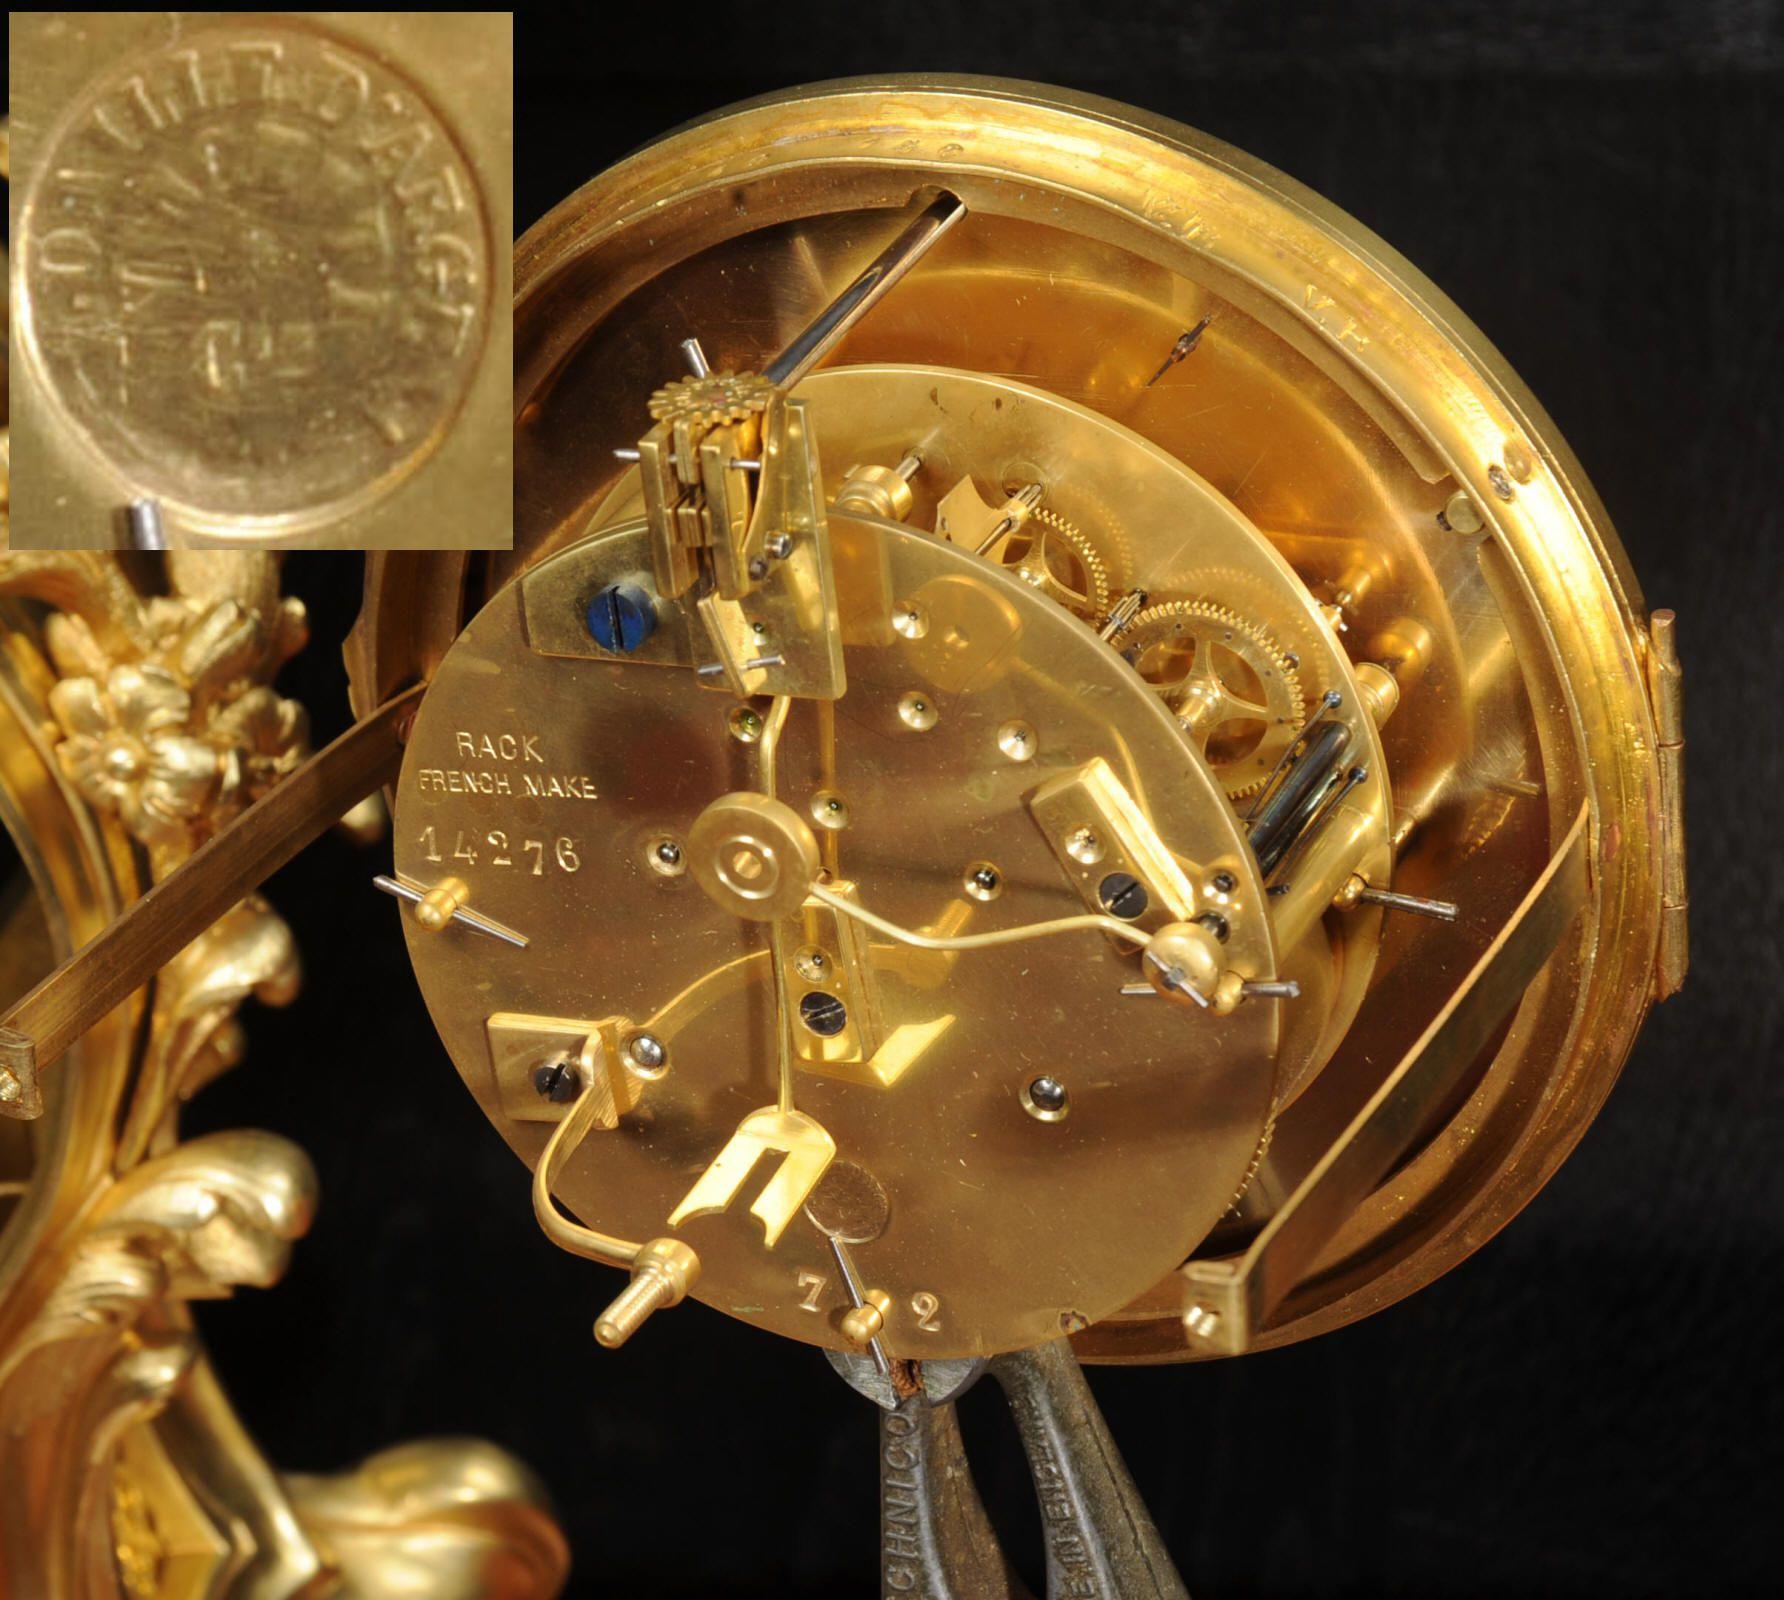 Belle horloge rococo française ancienne en bronze doré - Cupidon en vente 13